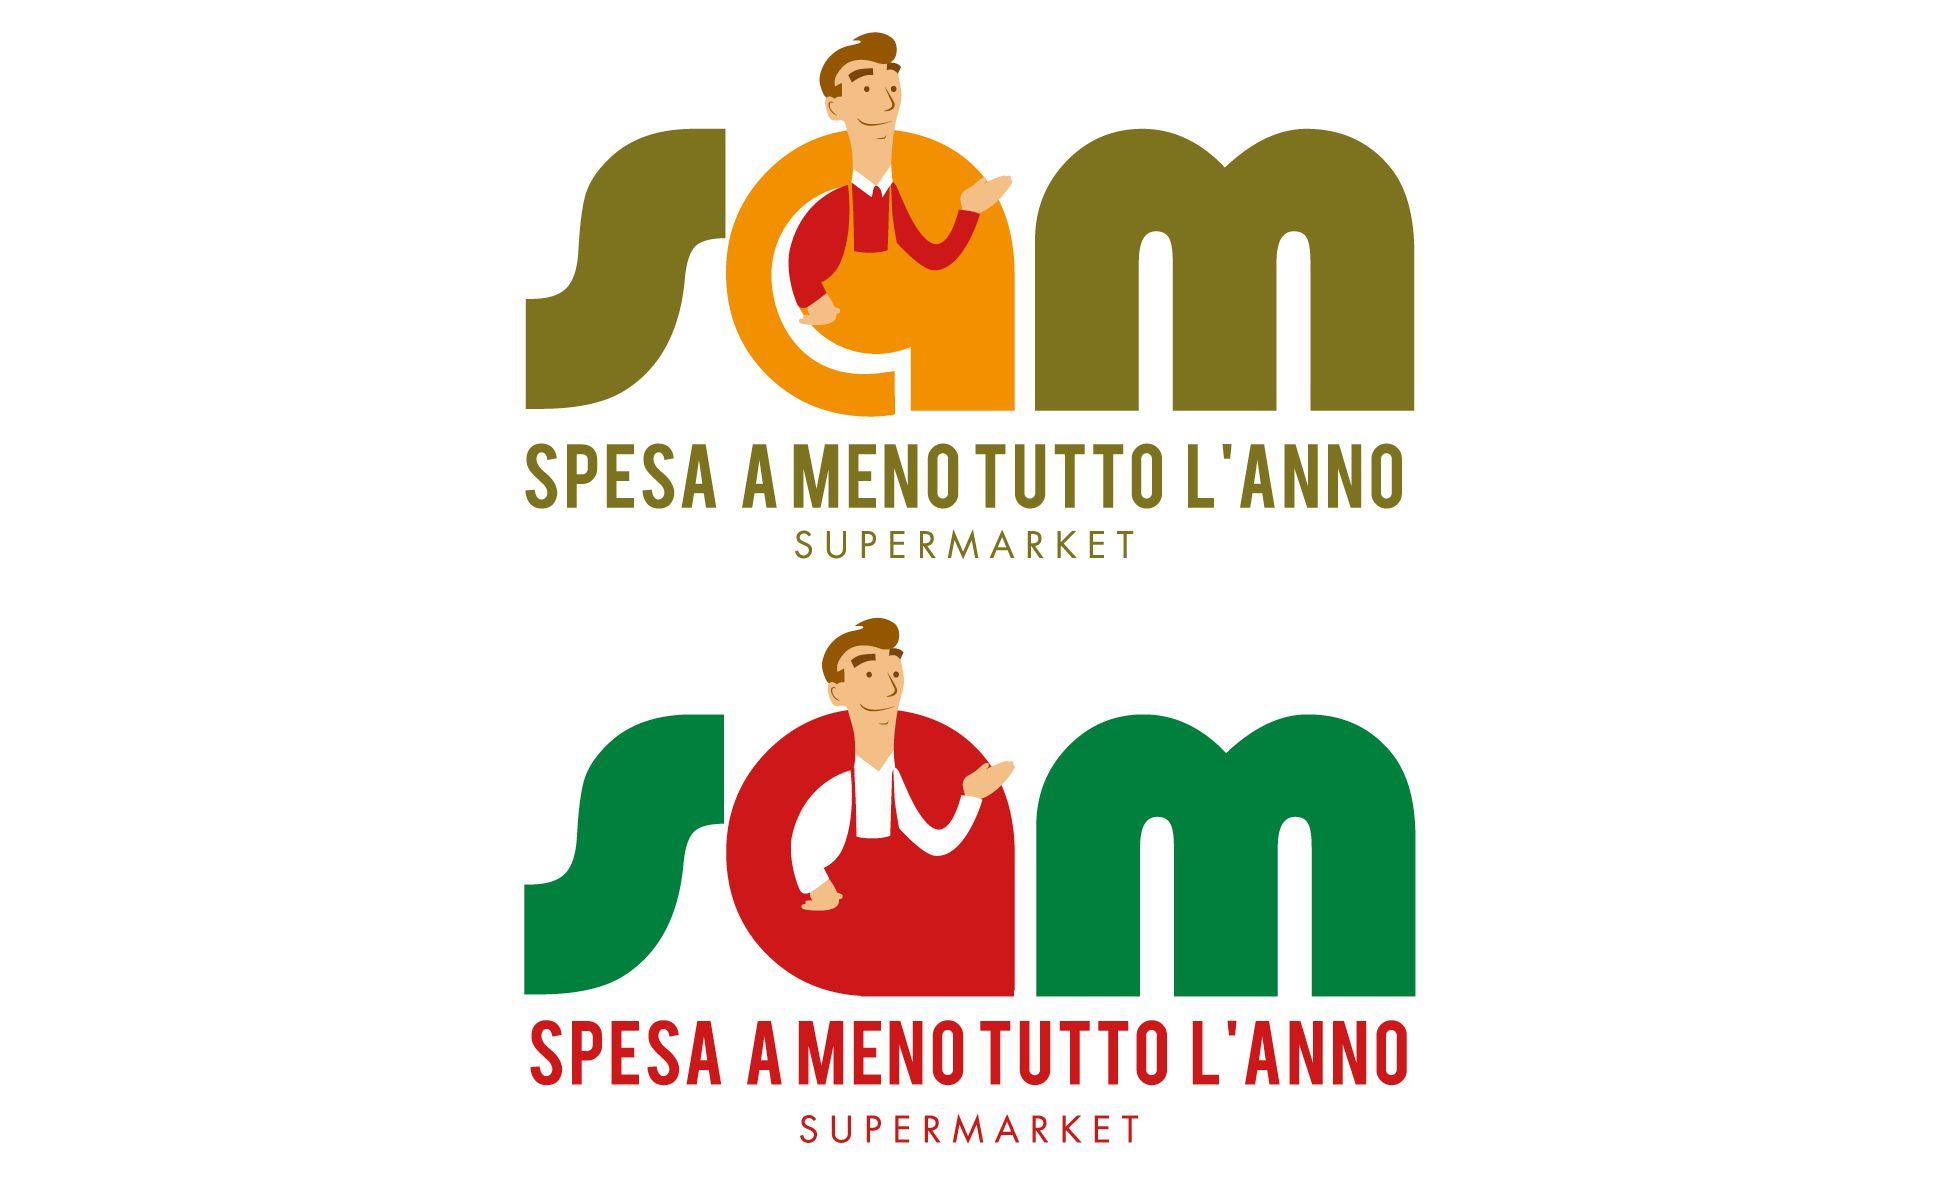 Zucchini Logo - Brand Identity for Martina Zucchini | Graphic design & logos | Pinterest